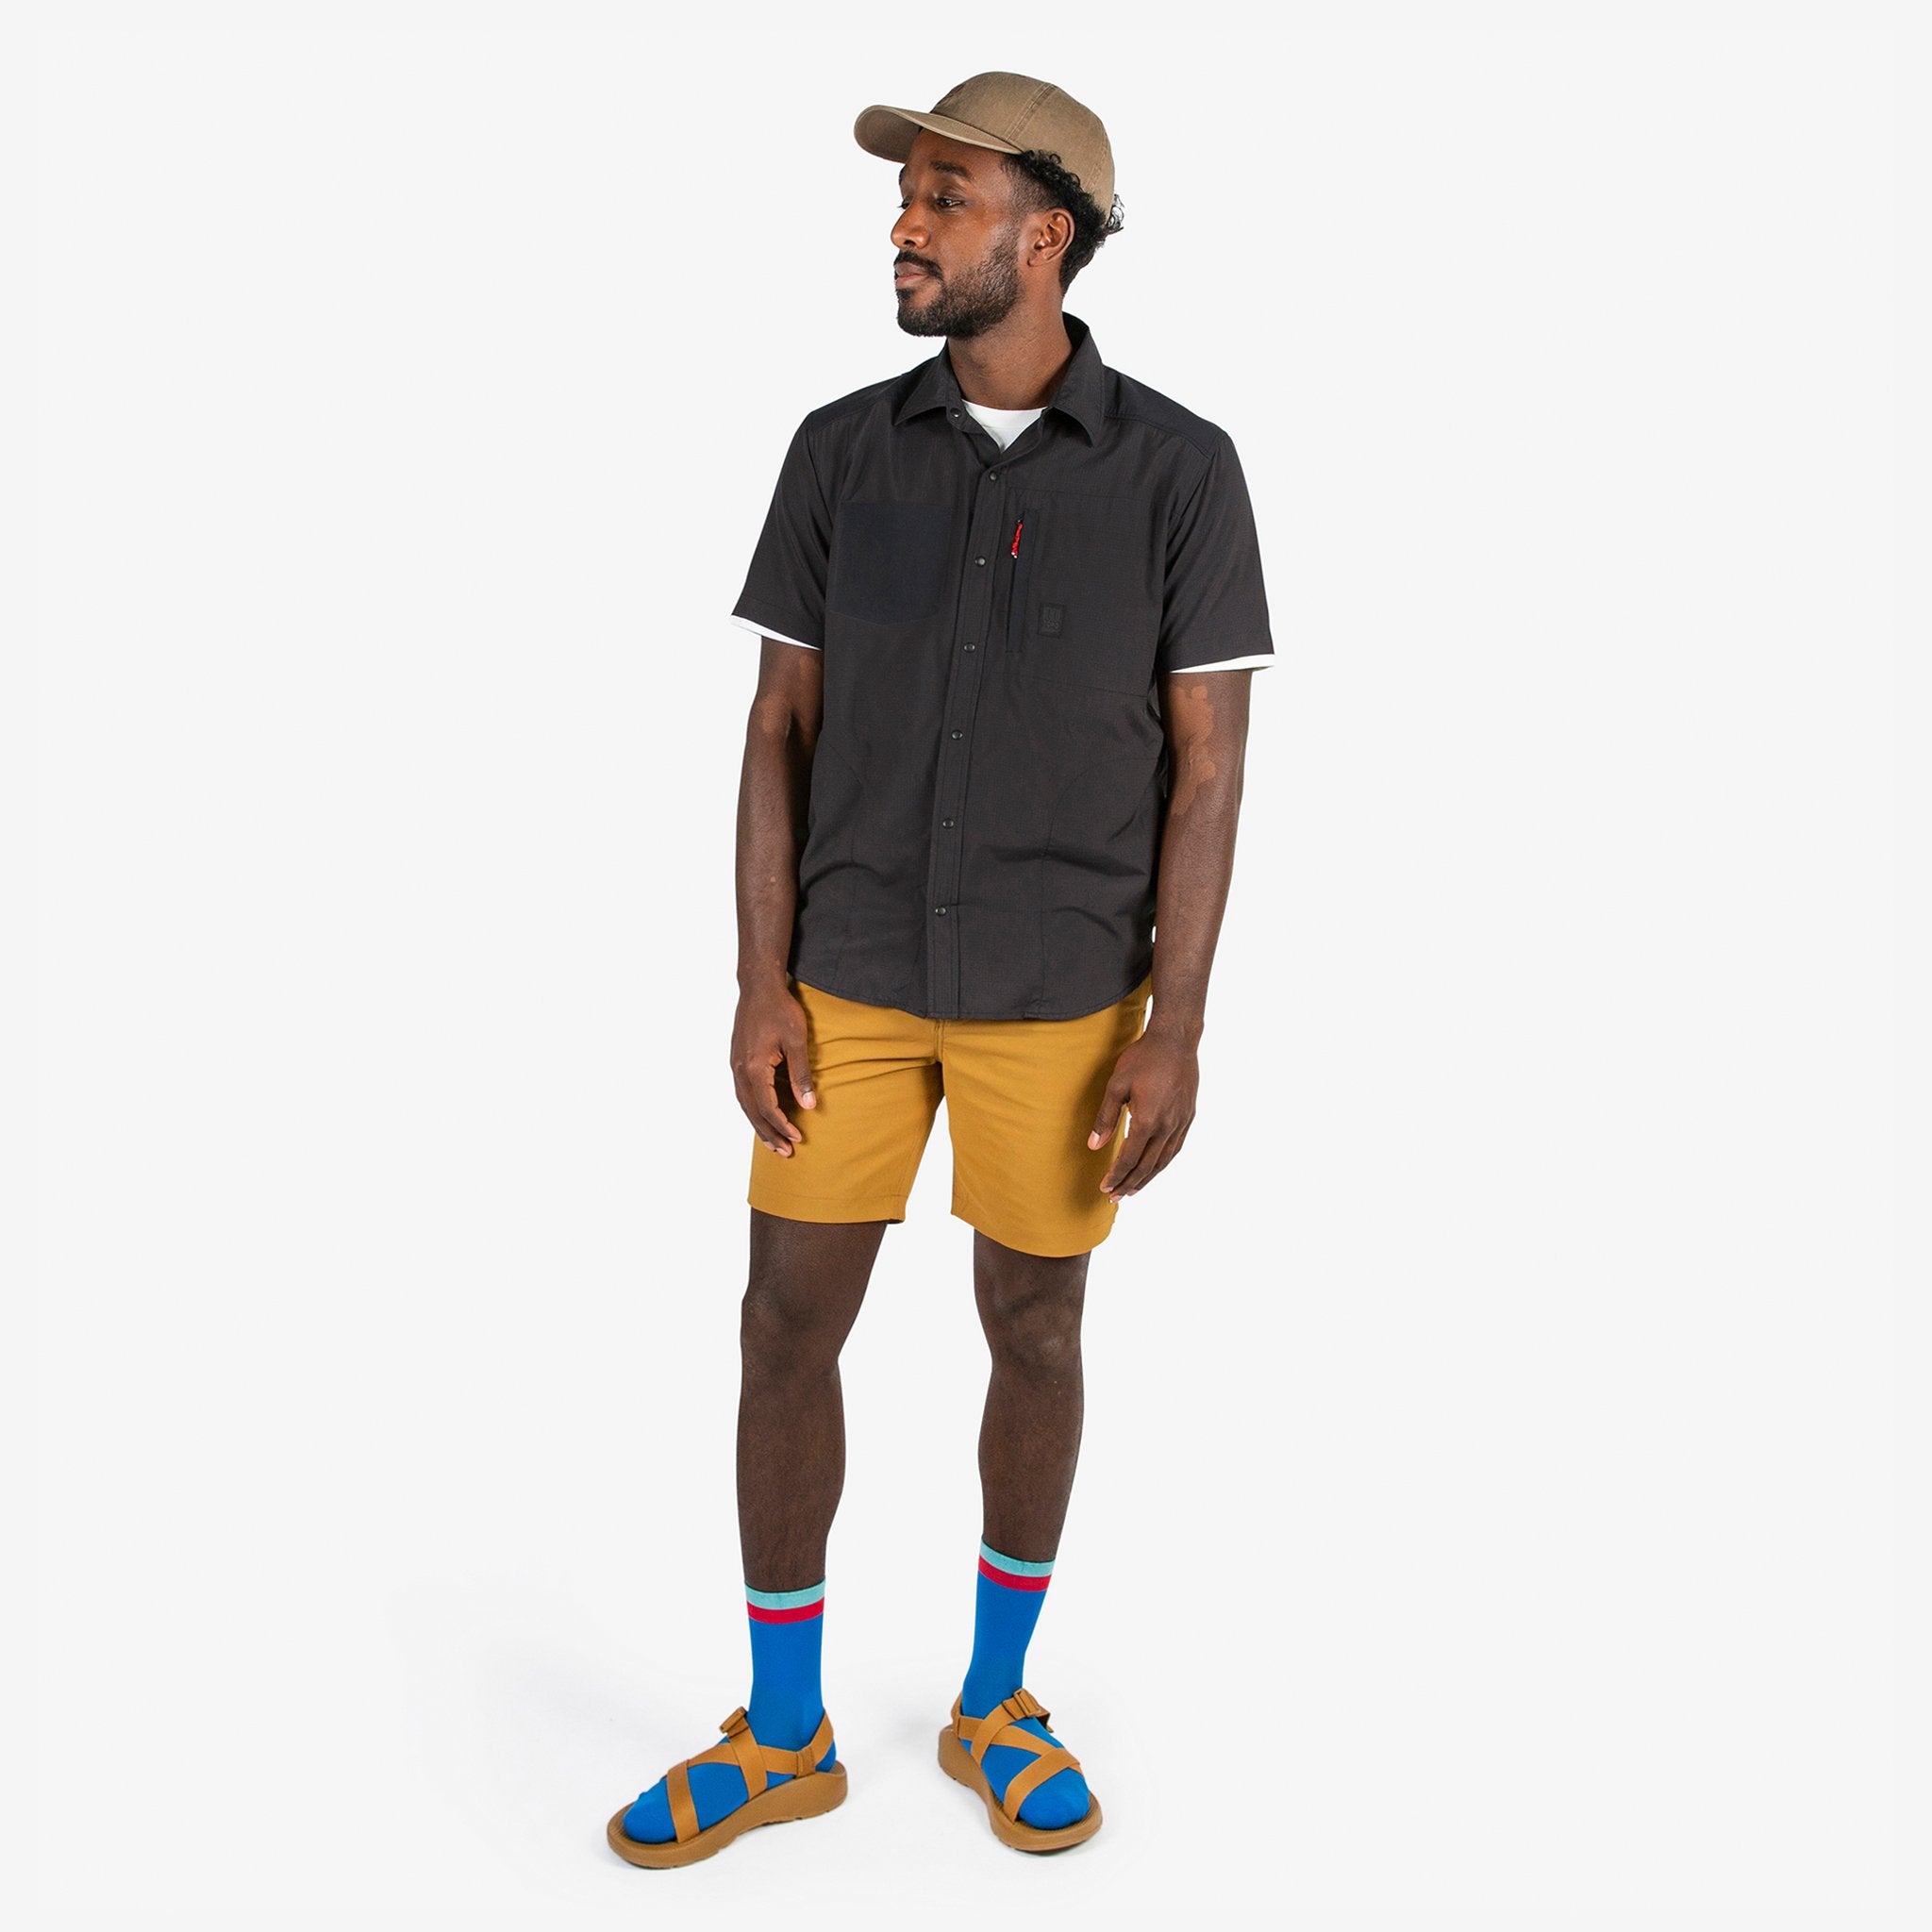 Topo Designs Men's Global lightweight quick dry travel Shorts in Dark Khaki brown on model.